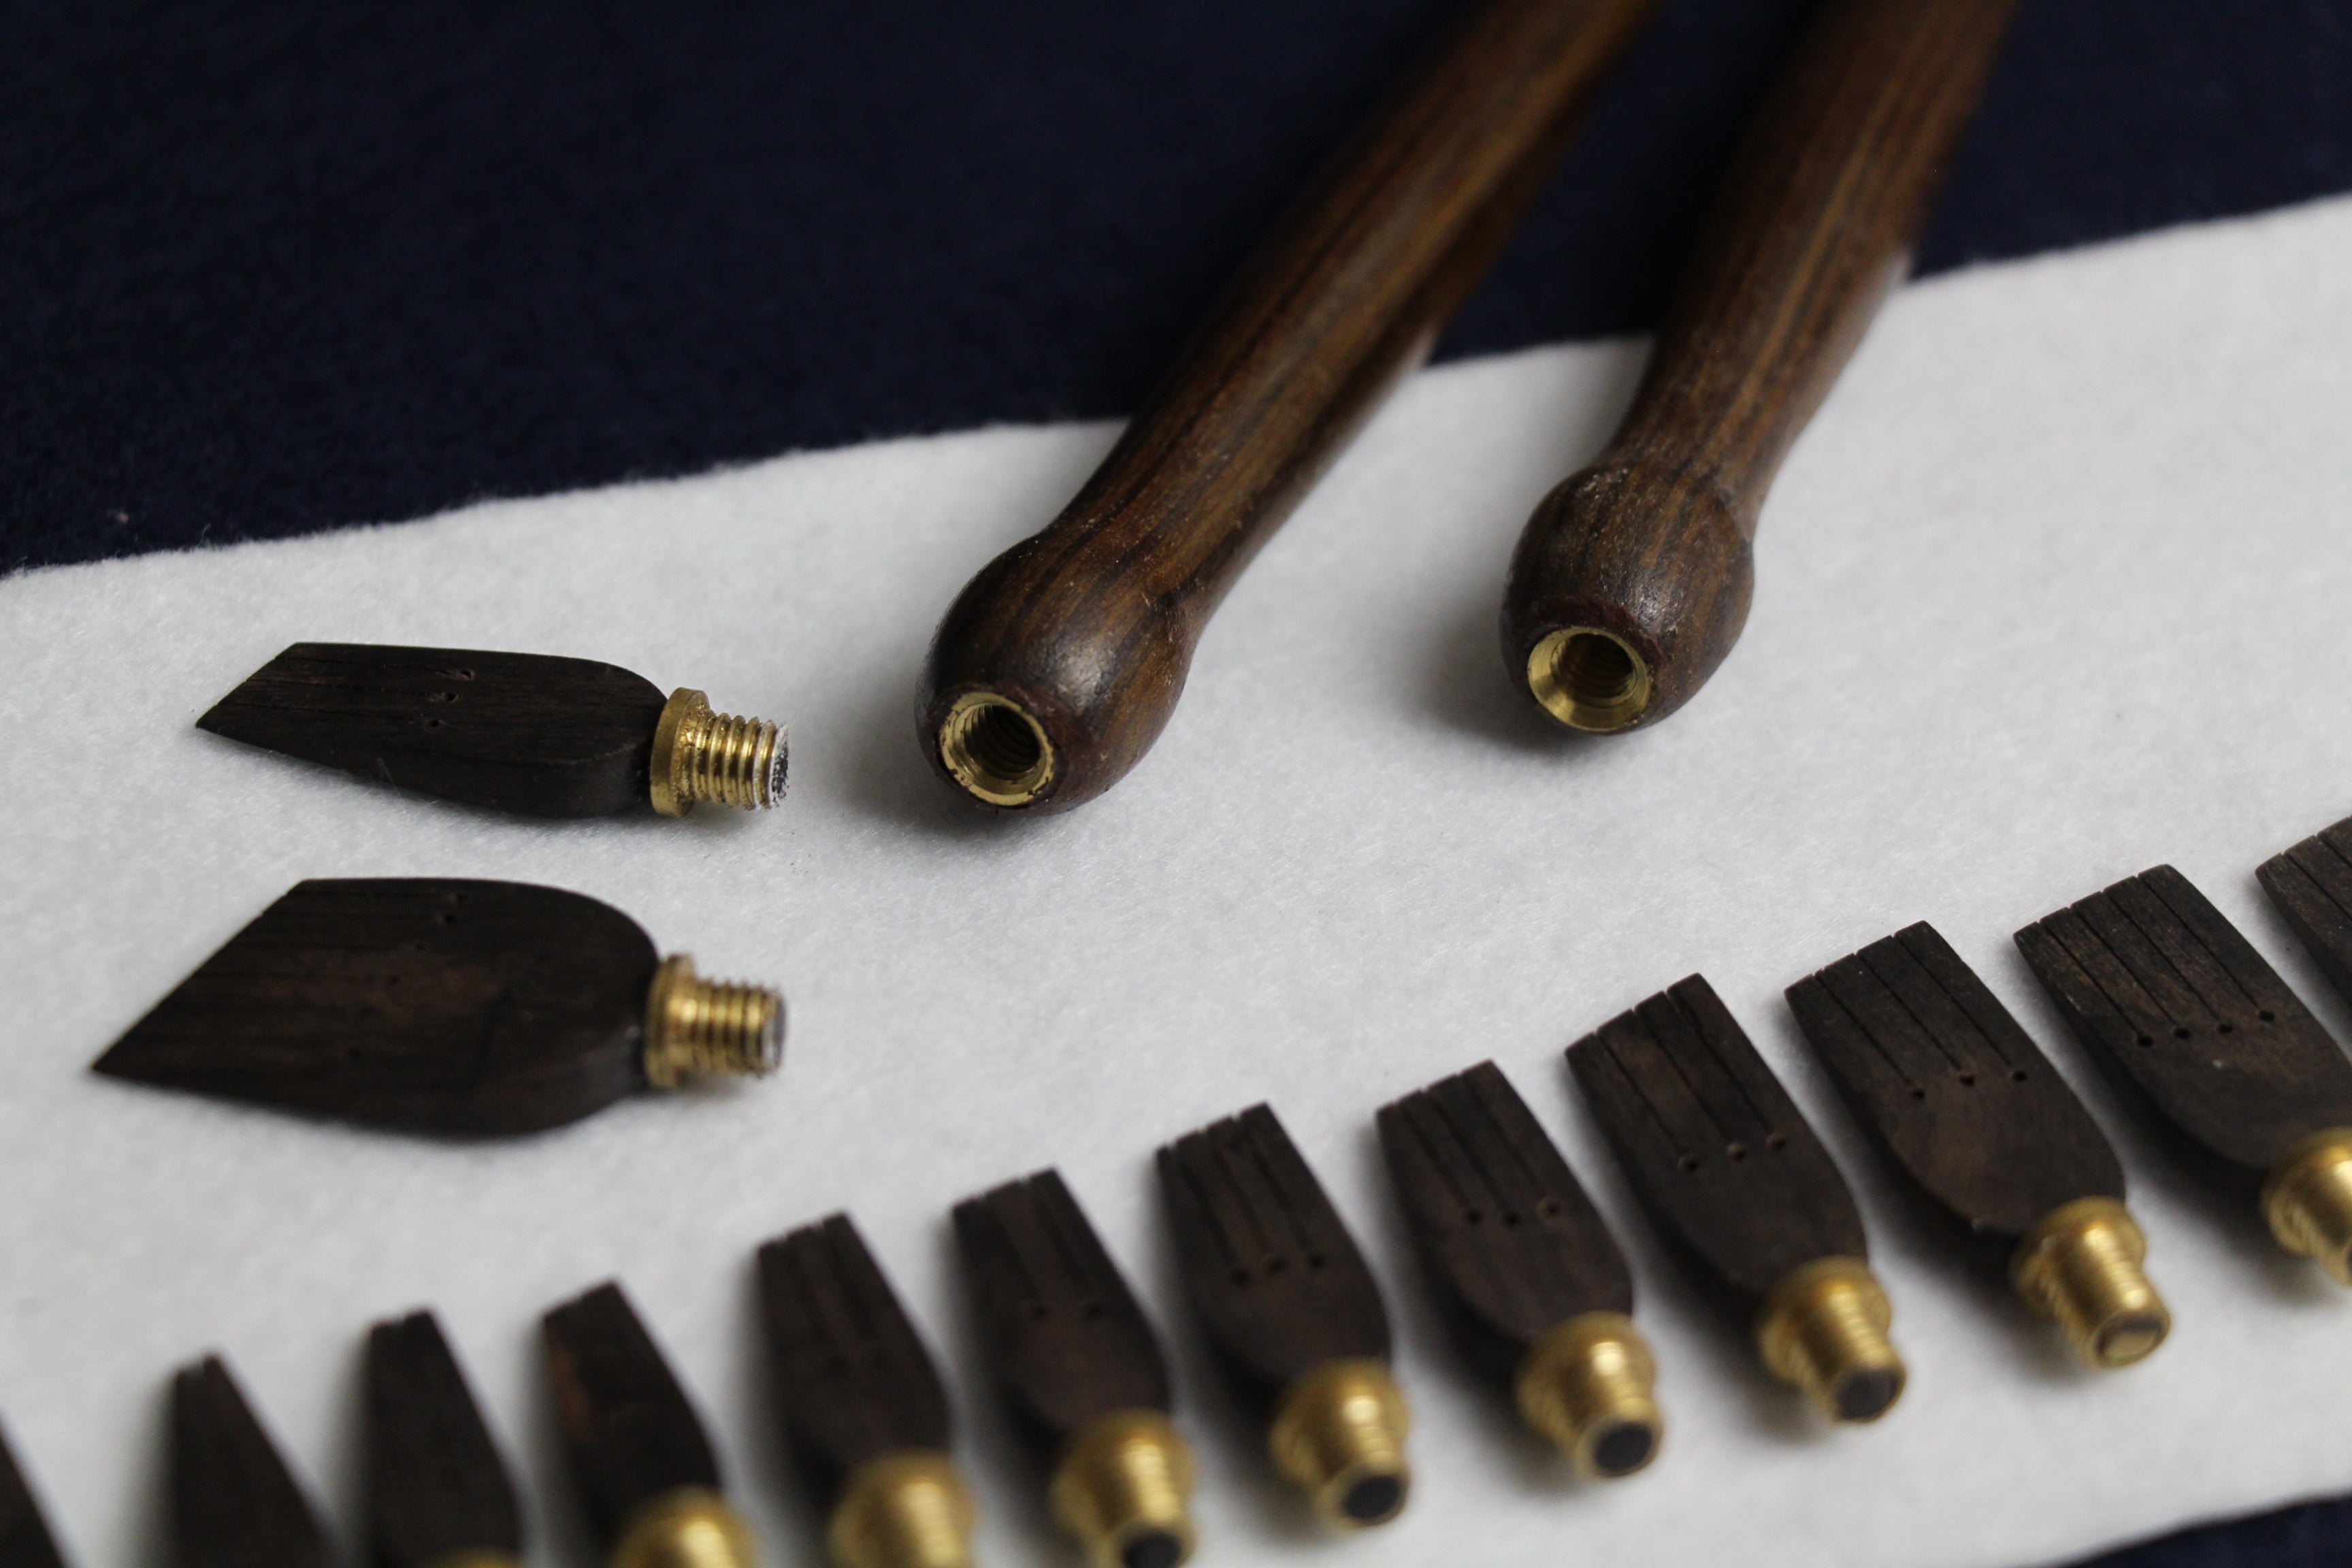 Luxury ebony set for Arabic calligraphy - 2 handles and 20 nibs (1 - 20 mm)